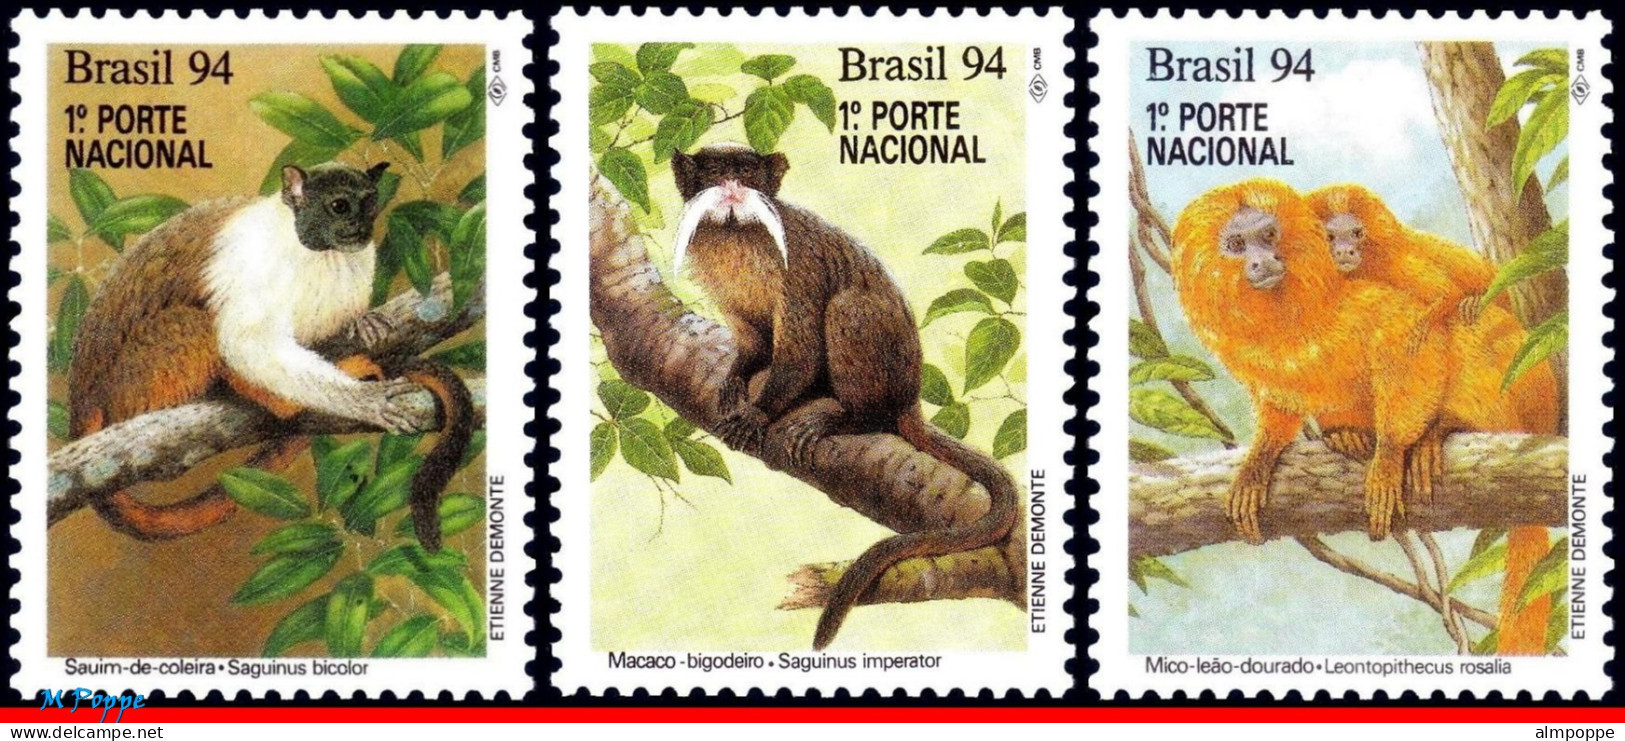 Ref. BR-2474-76 BRAZIL 1994 - MONKEYS, NATURE,PRESERVATION, MI# 2589-2591, SET MNH, ANIMALS, FAUNA 3V Sc# 2474-2476 - Nuevos